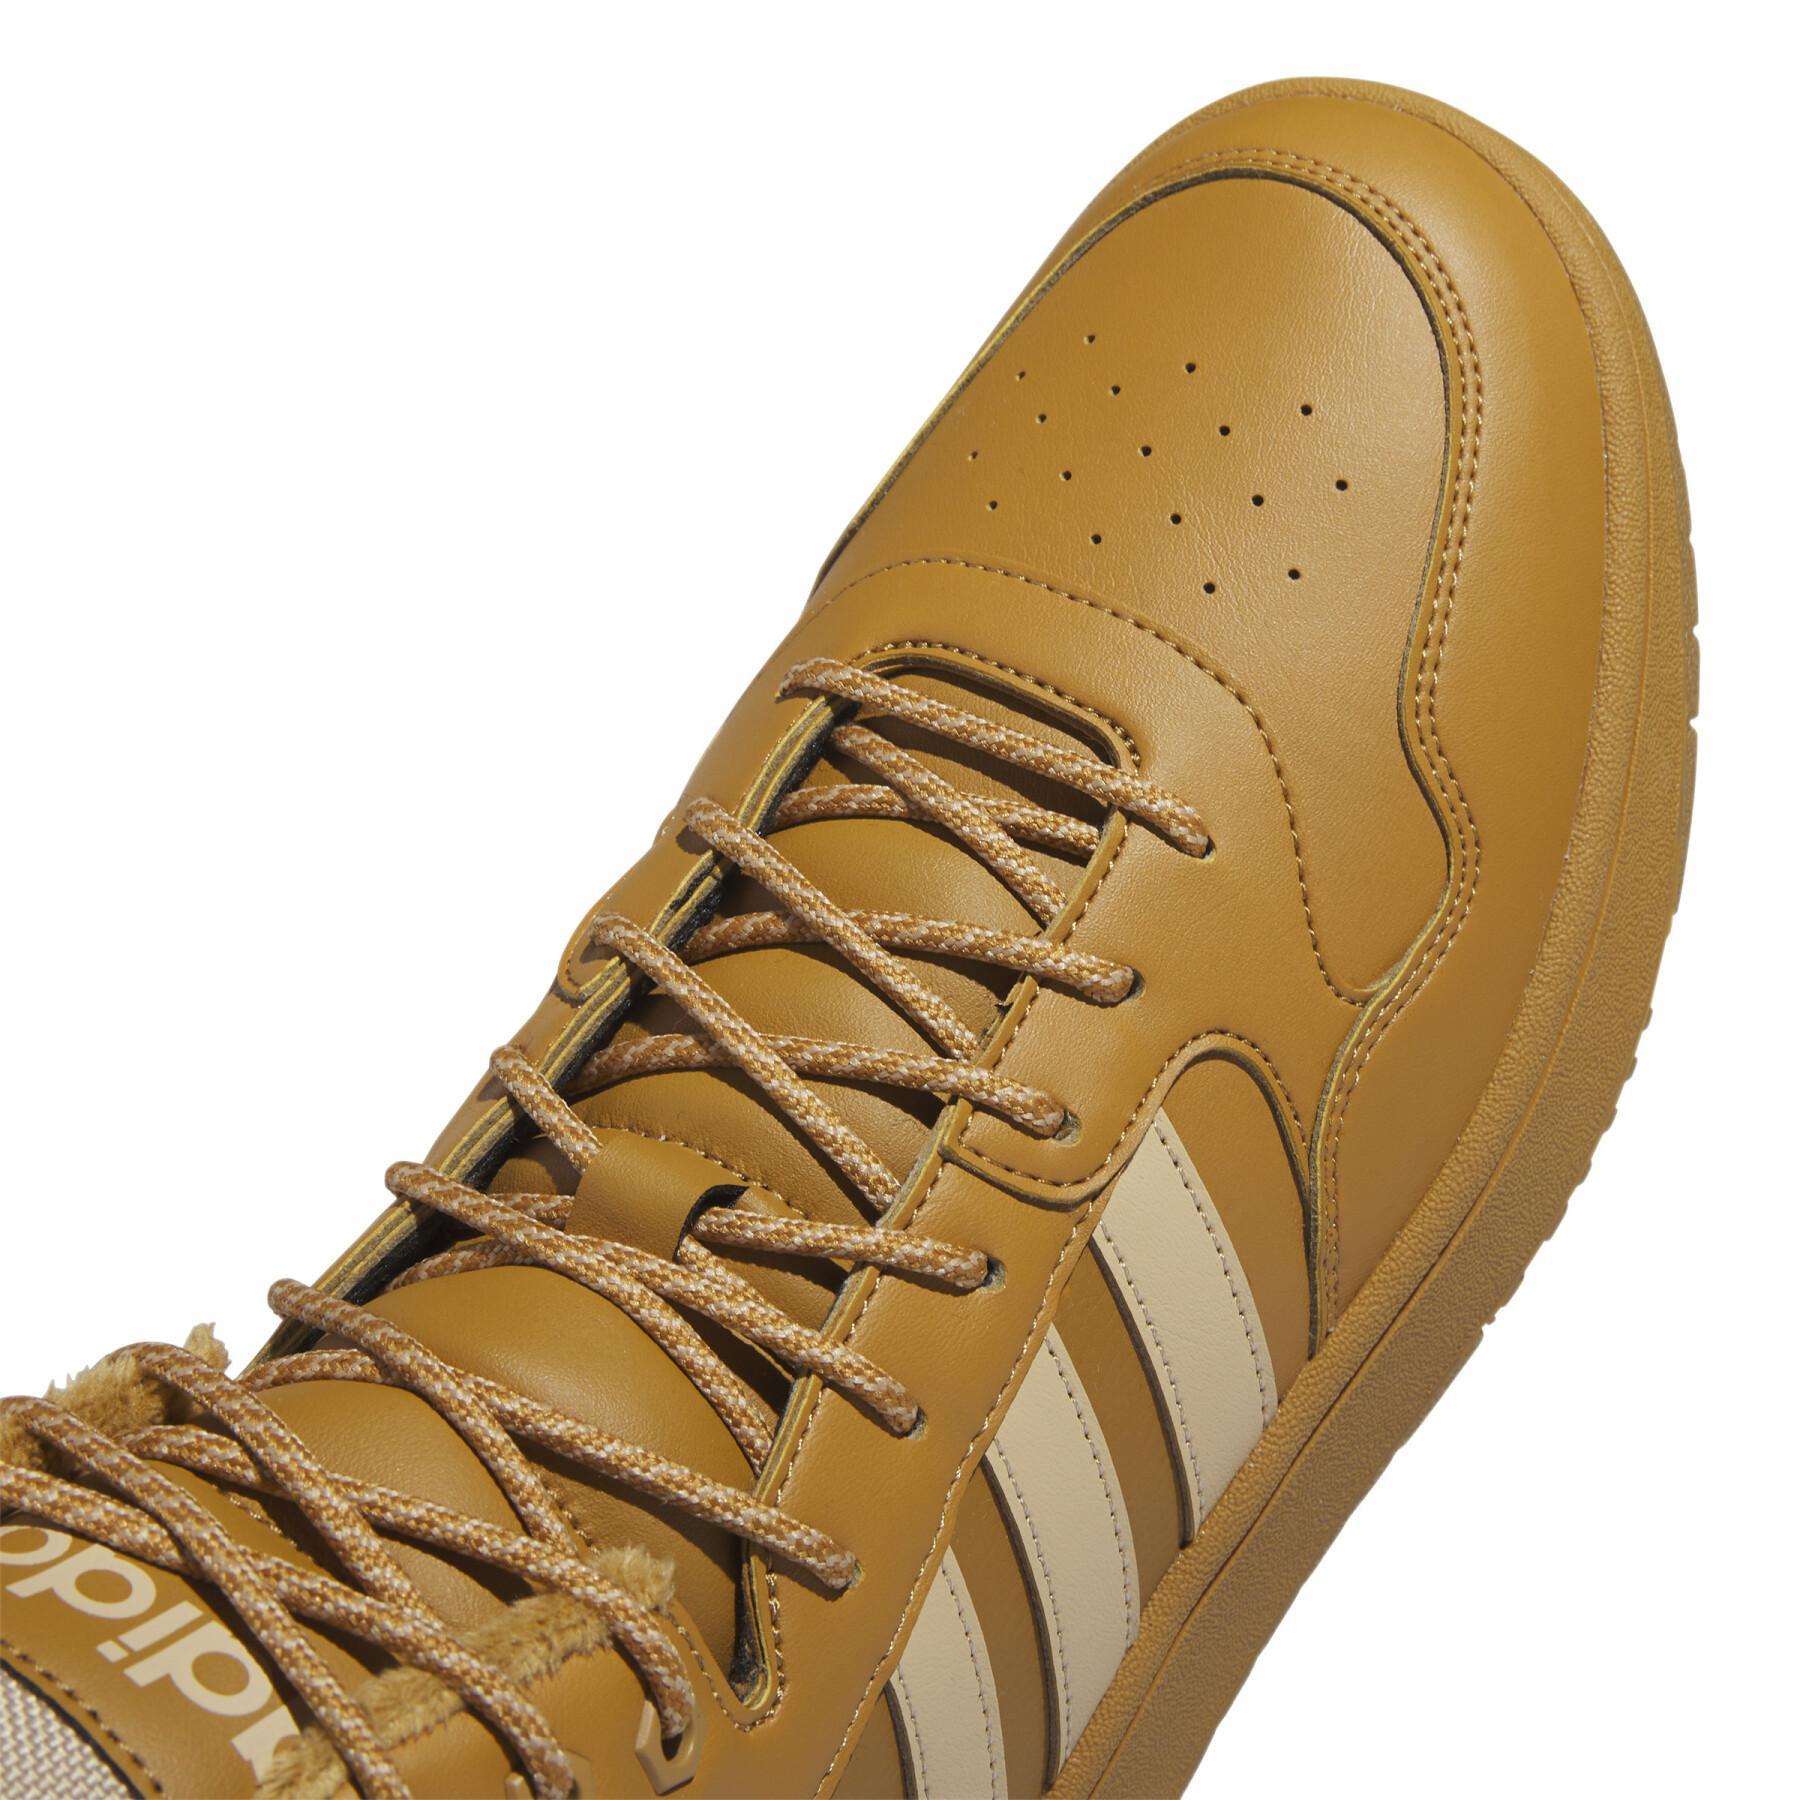 Baskets adidas Originals Hoops 3.0 Mid Classic Fur Lining Winterized